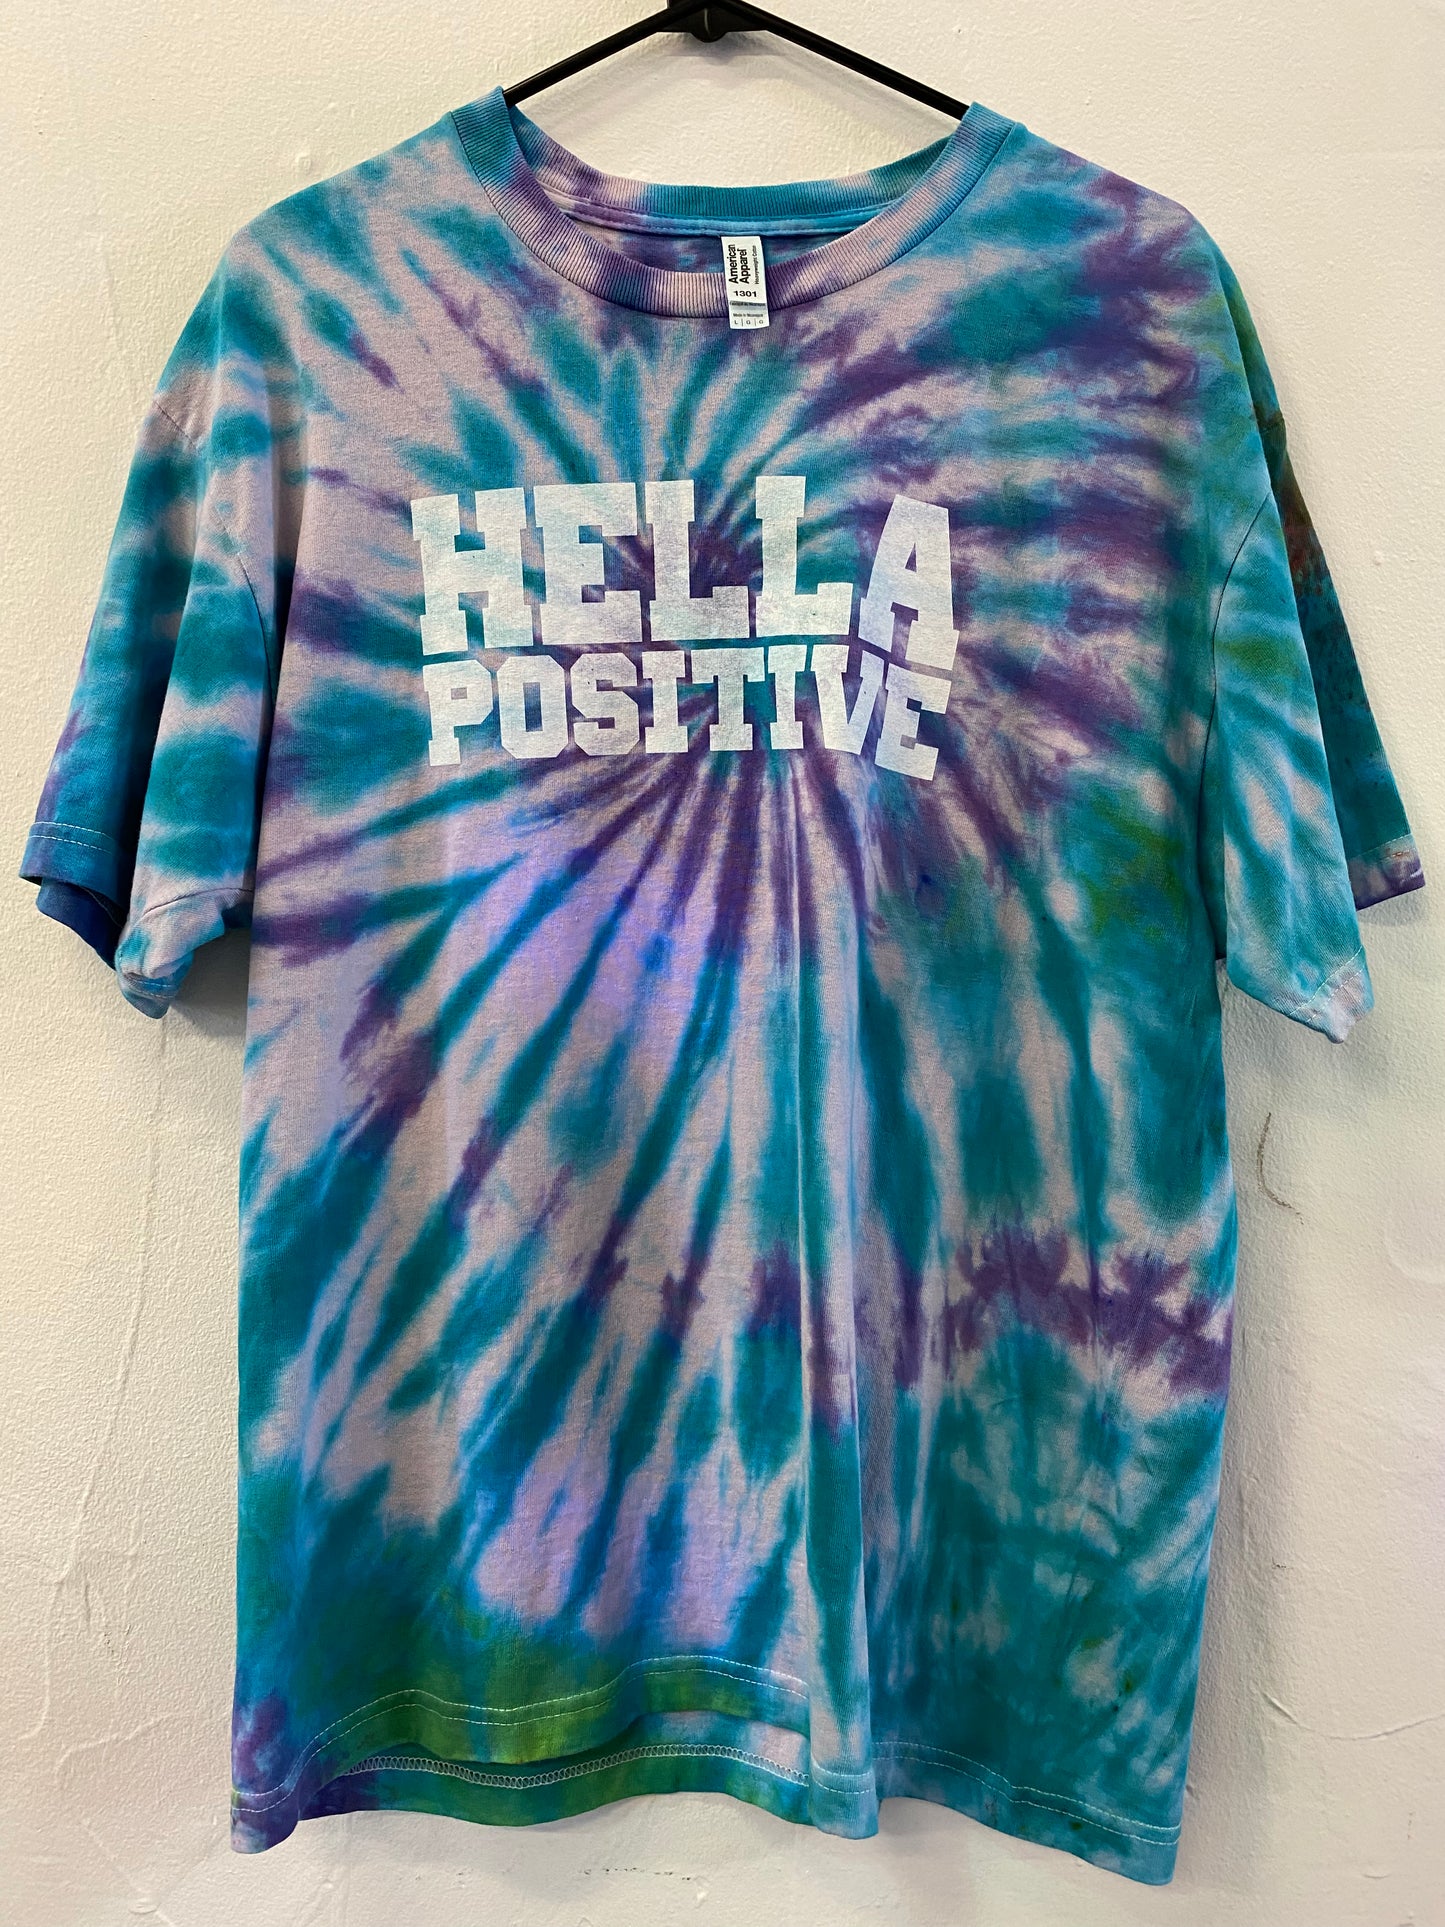 Hella Positive Tie Dye T shirt - Large